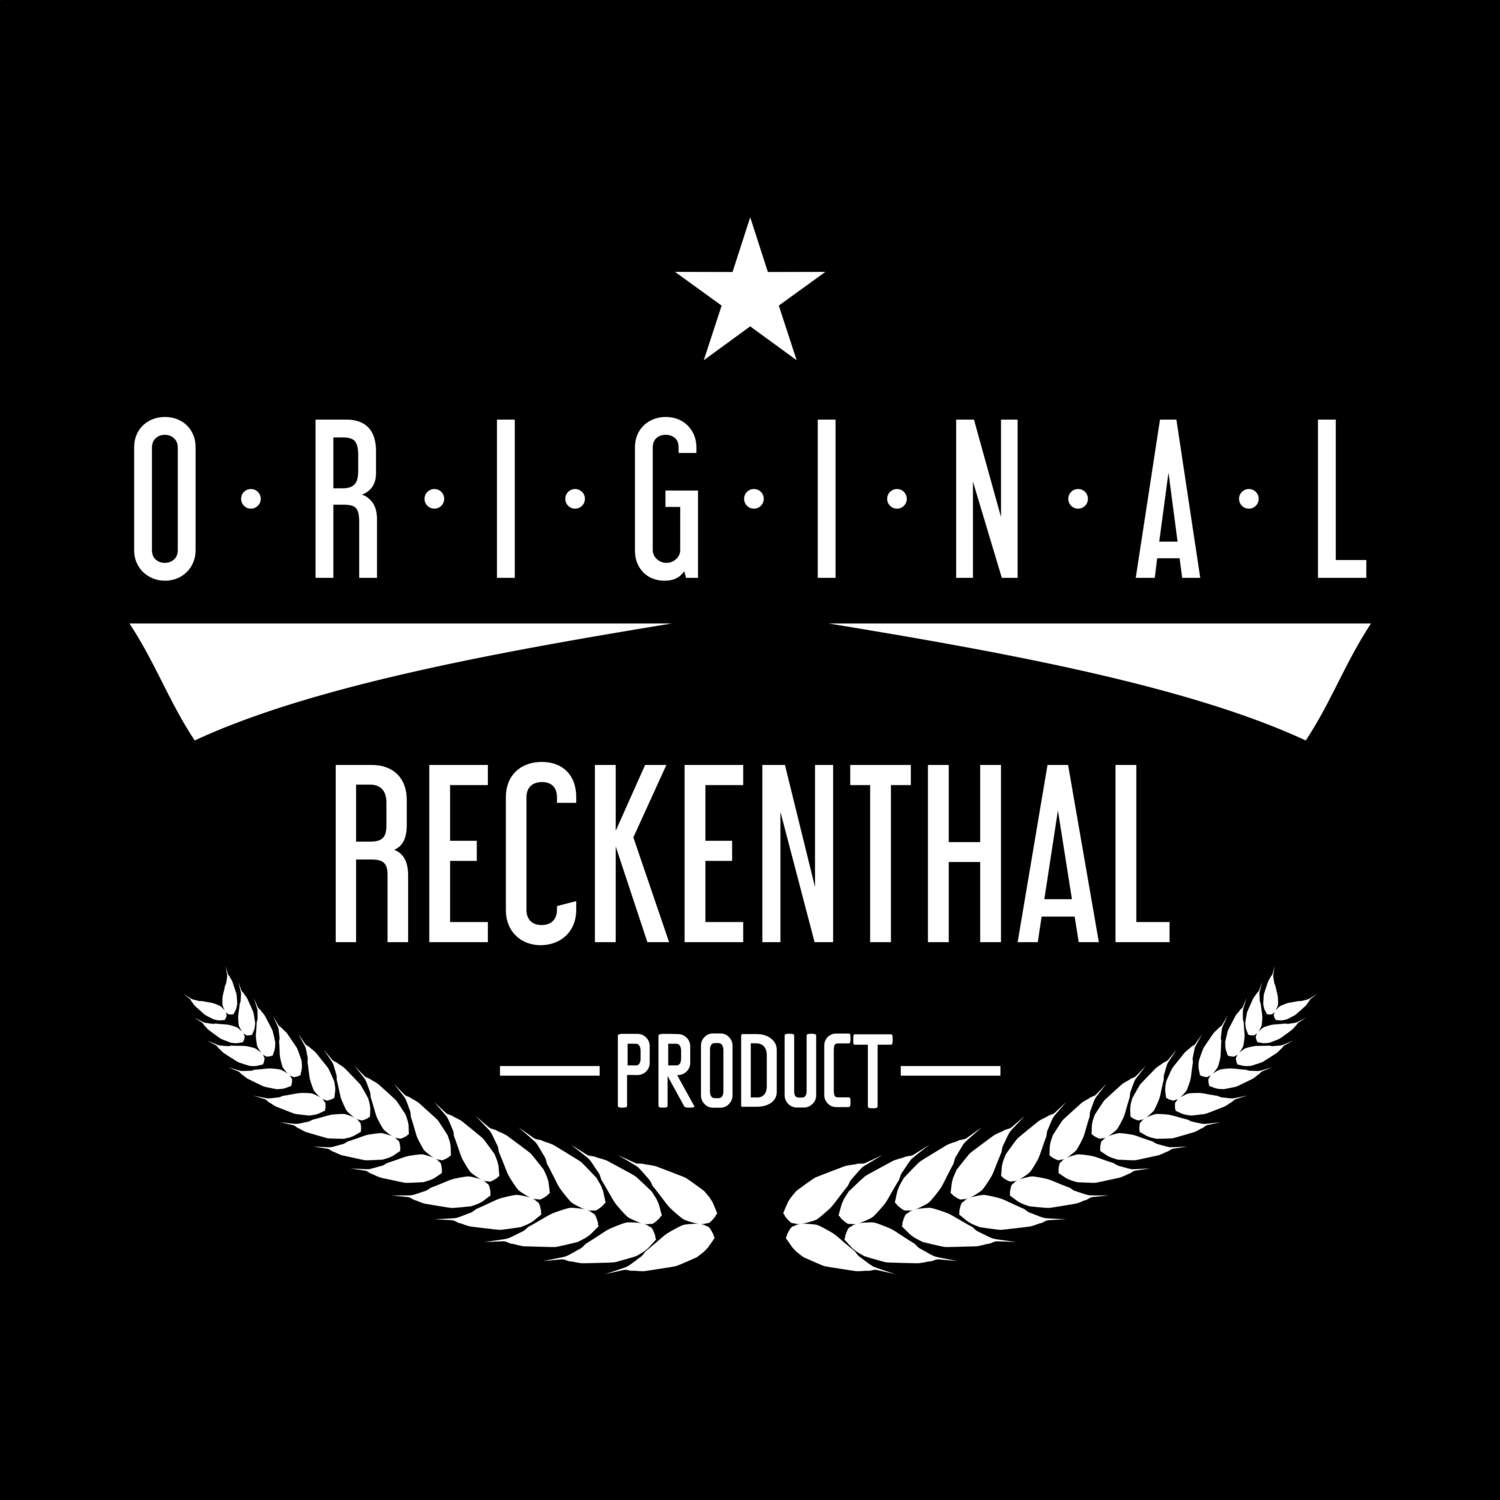 Reckenthal T-Shirt »Original Product«